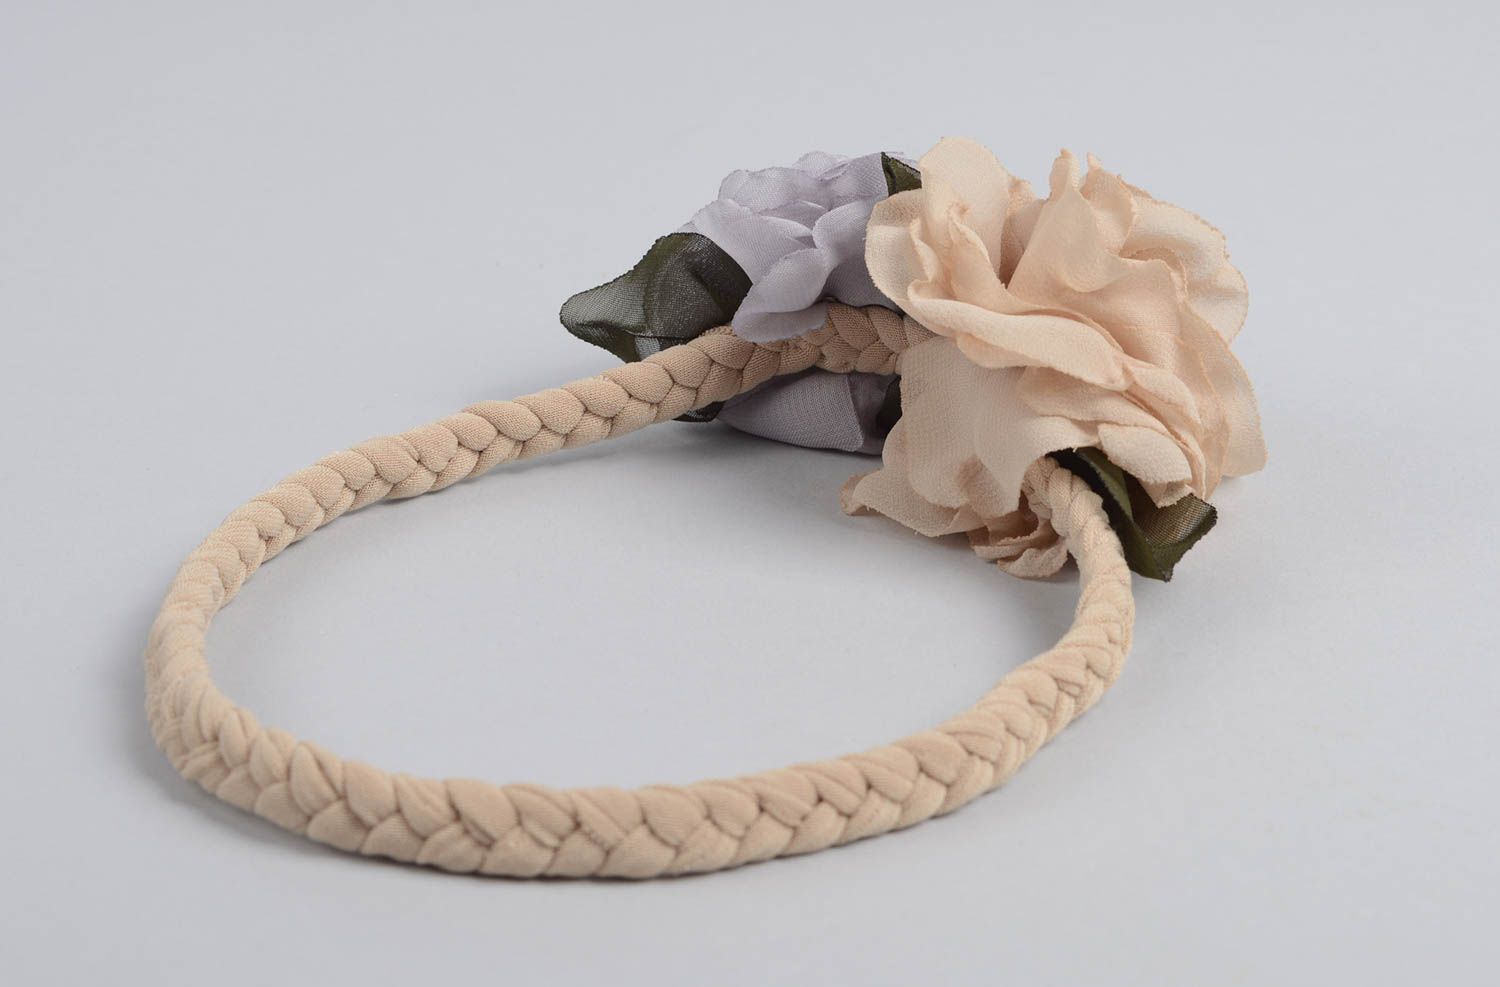 Unusual handmade flower headband stylish headband flowers in hair small gifts photo 2